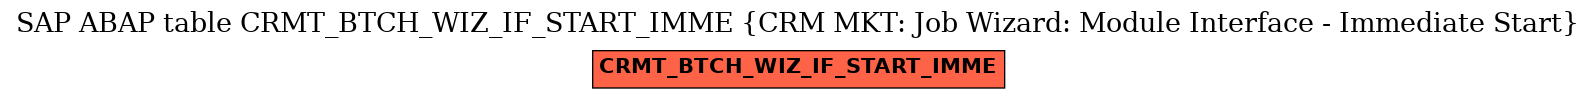 E-R Diagram for table CRMT_BTCH_WIZ_IF_START_IMME (CRM MKT: Job Wizard: Module Interface - Immediate Start)